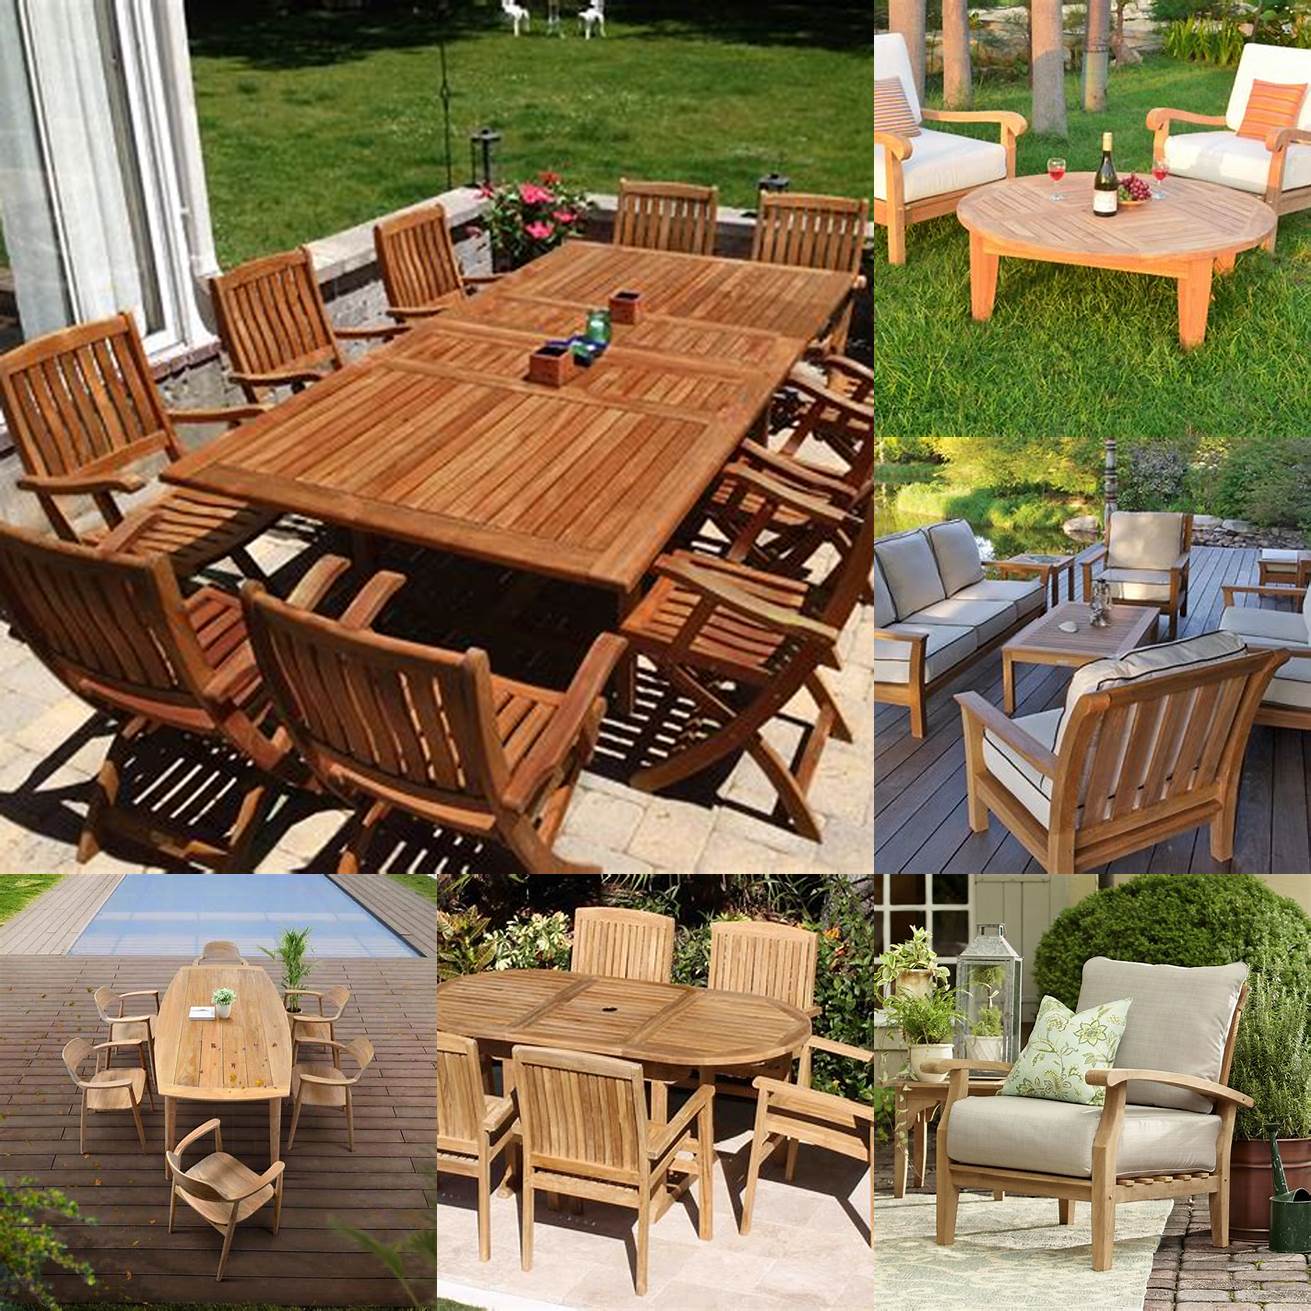 Teak furniture in use outdoors